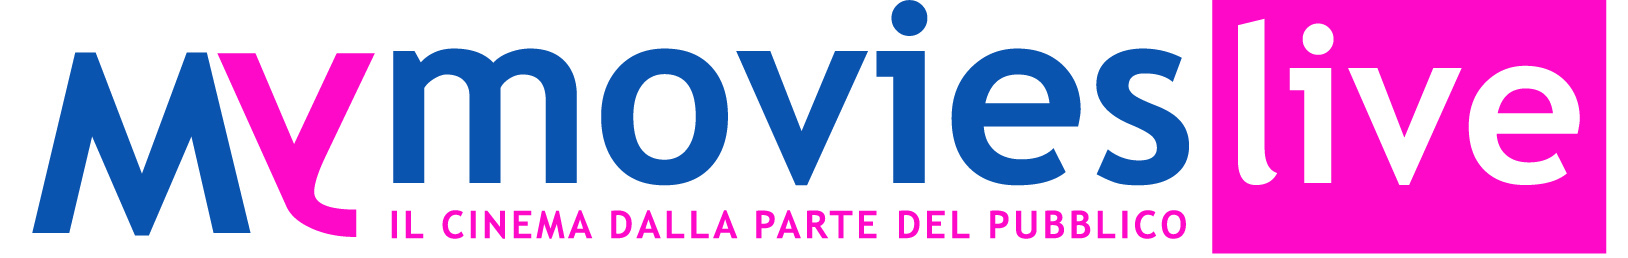 logo Mymovies.jpg